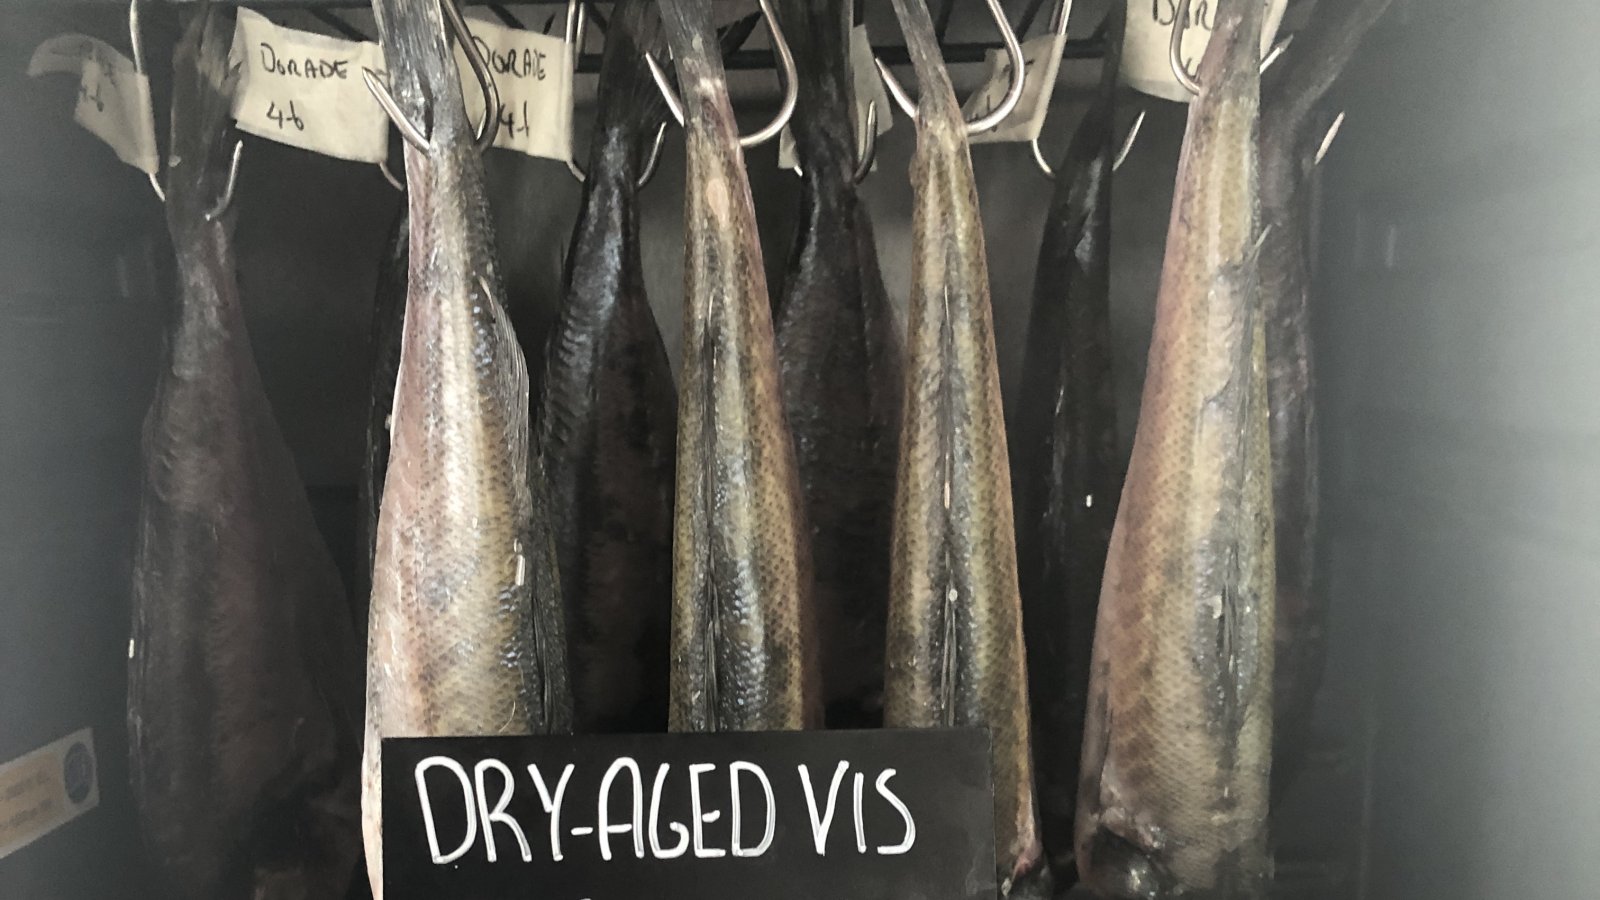 Dry aged vis